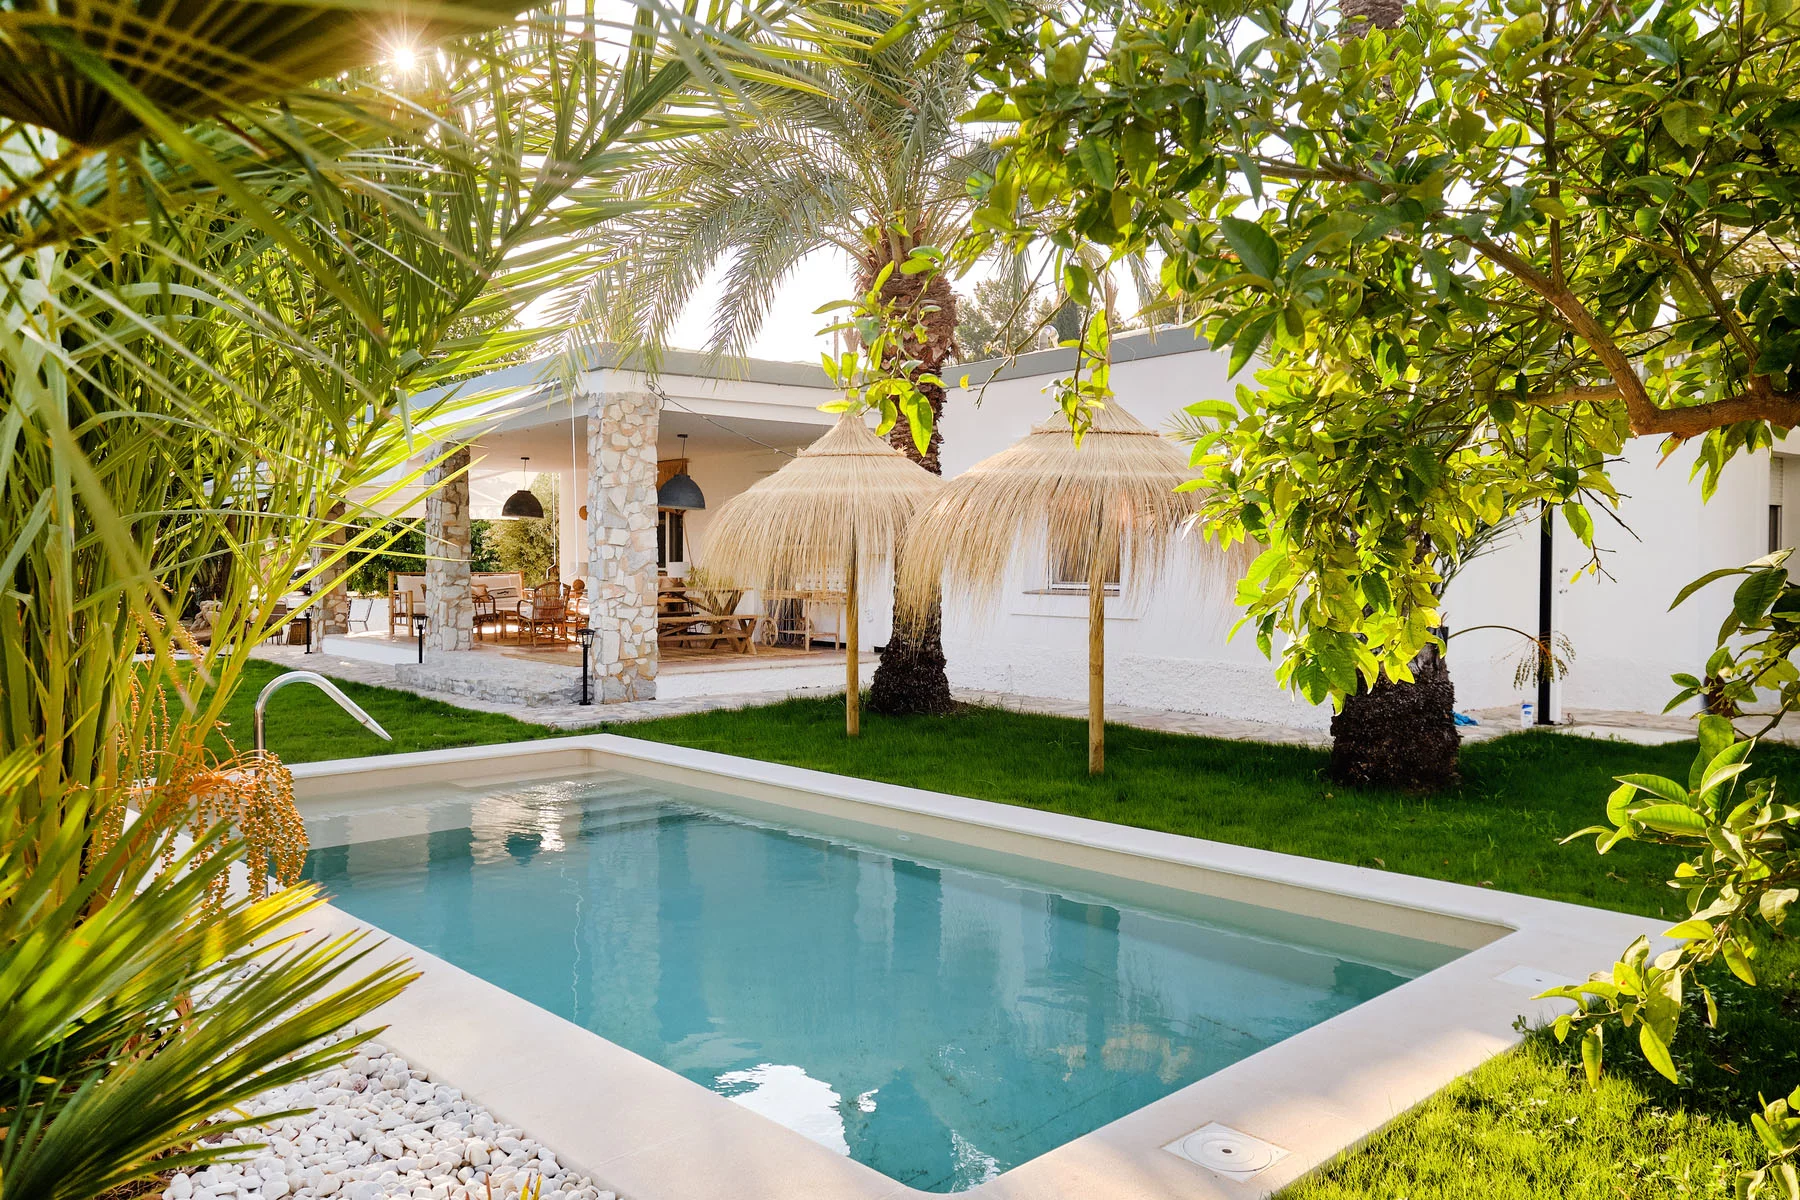 Spanish villa with pool